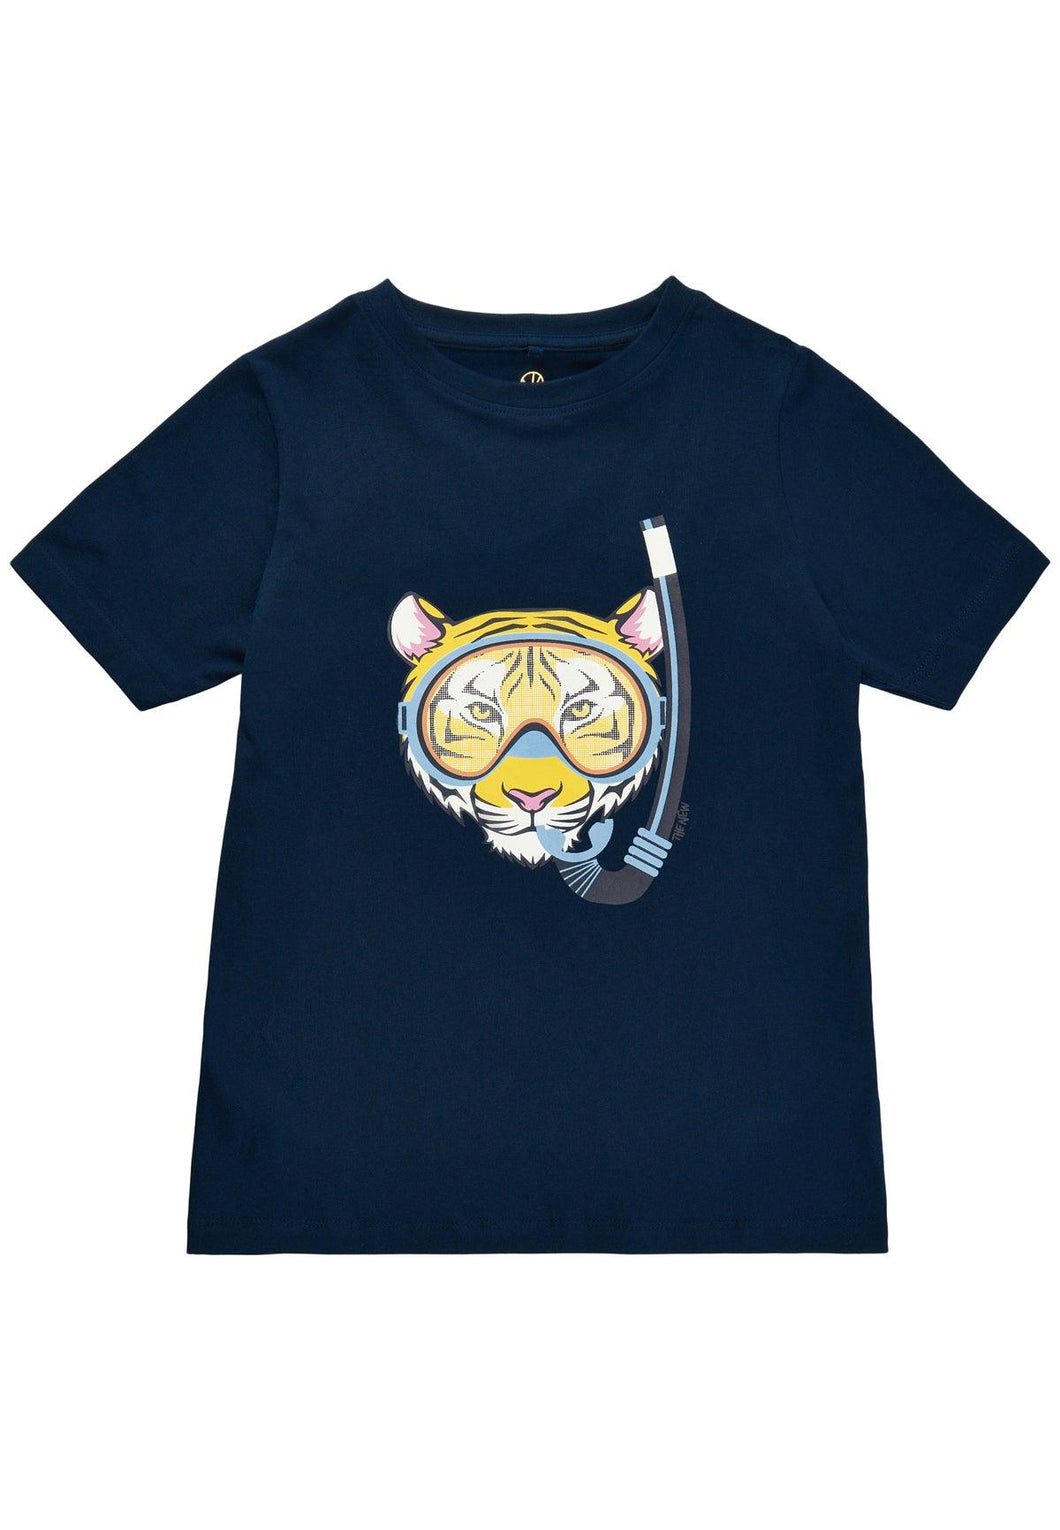 T-shirt Tiger - THE NEW - Little moon